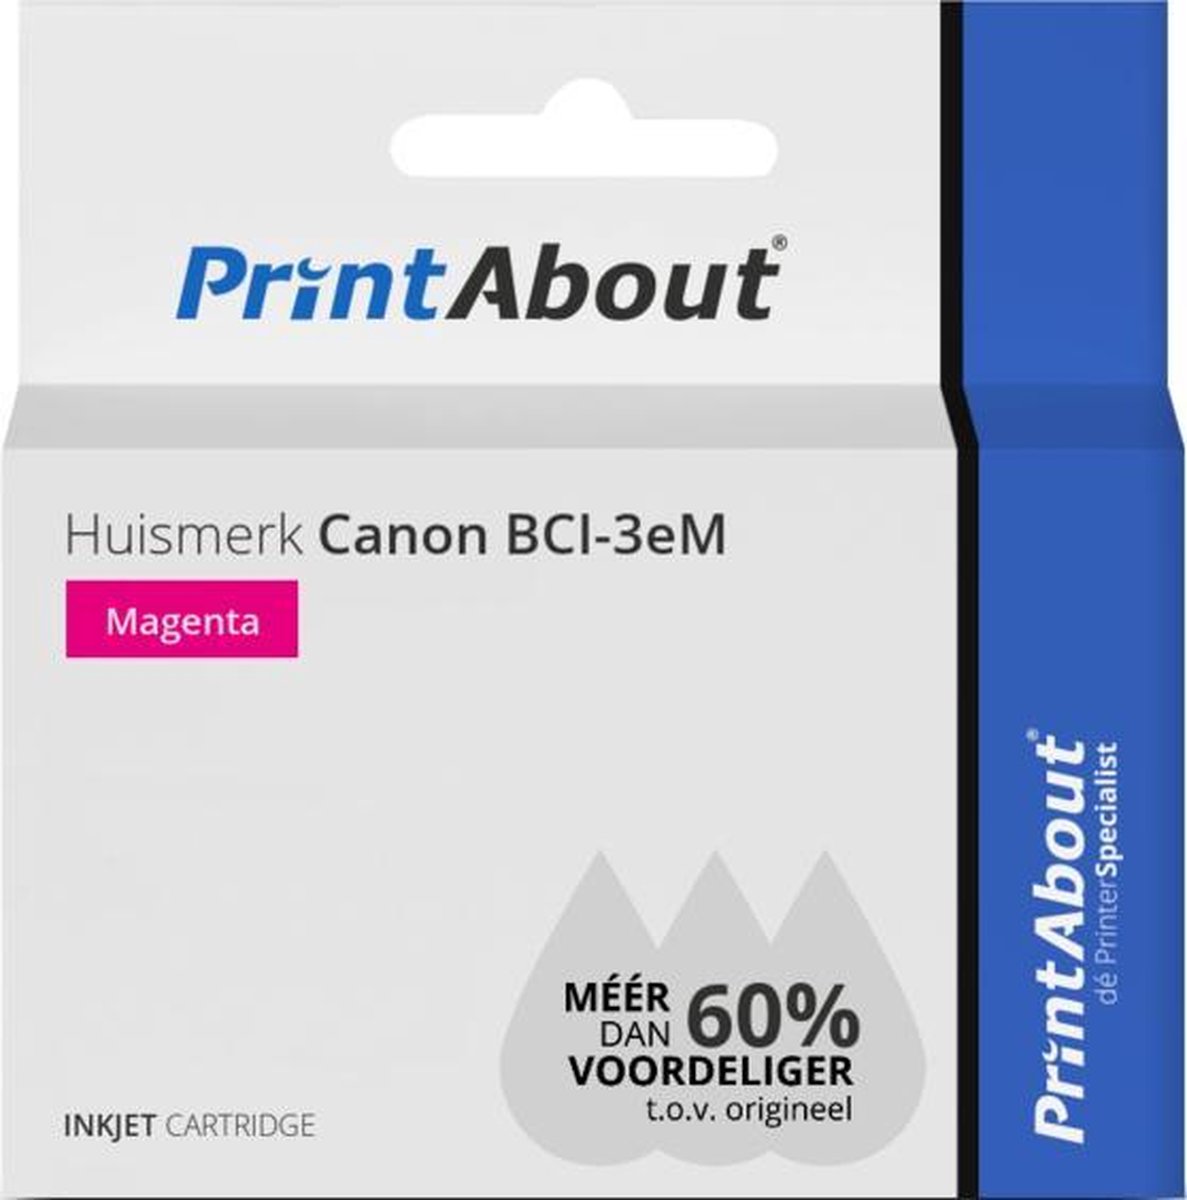 PrintAbout Huismerk Canon BCI-3eM Inktcartridge - Magenta